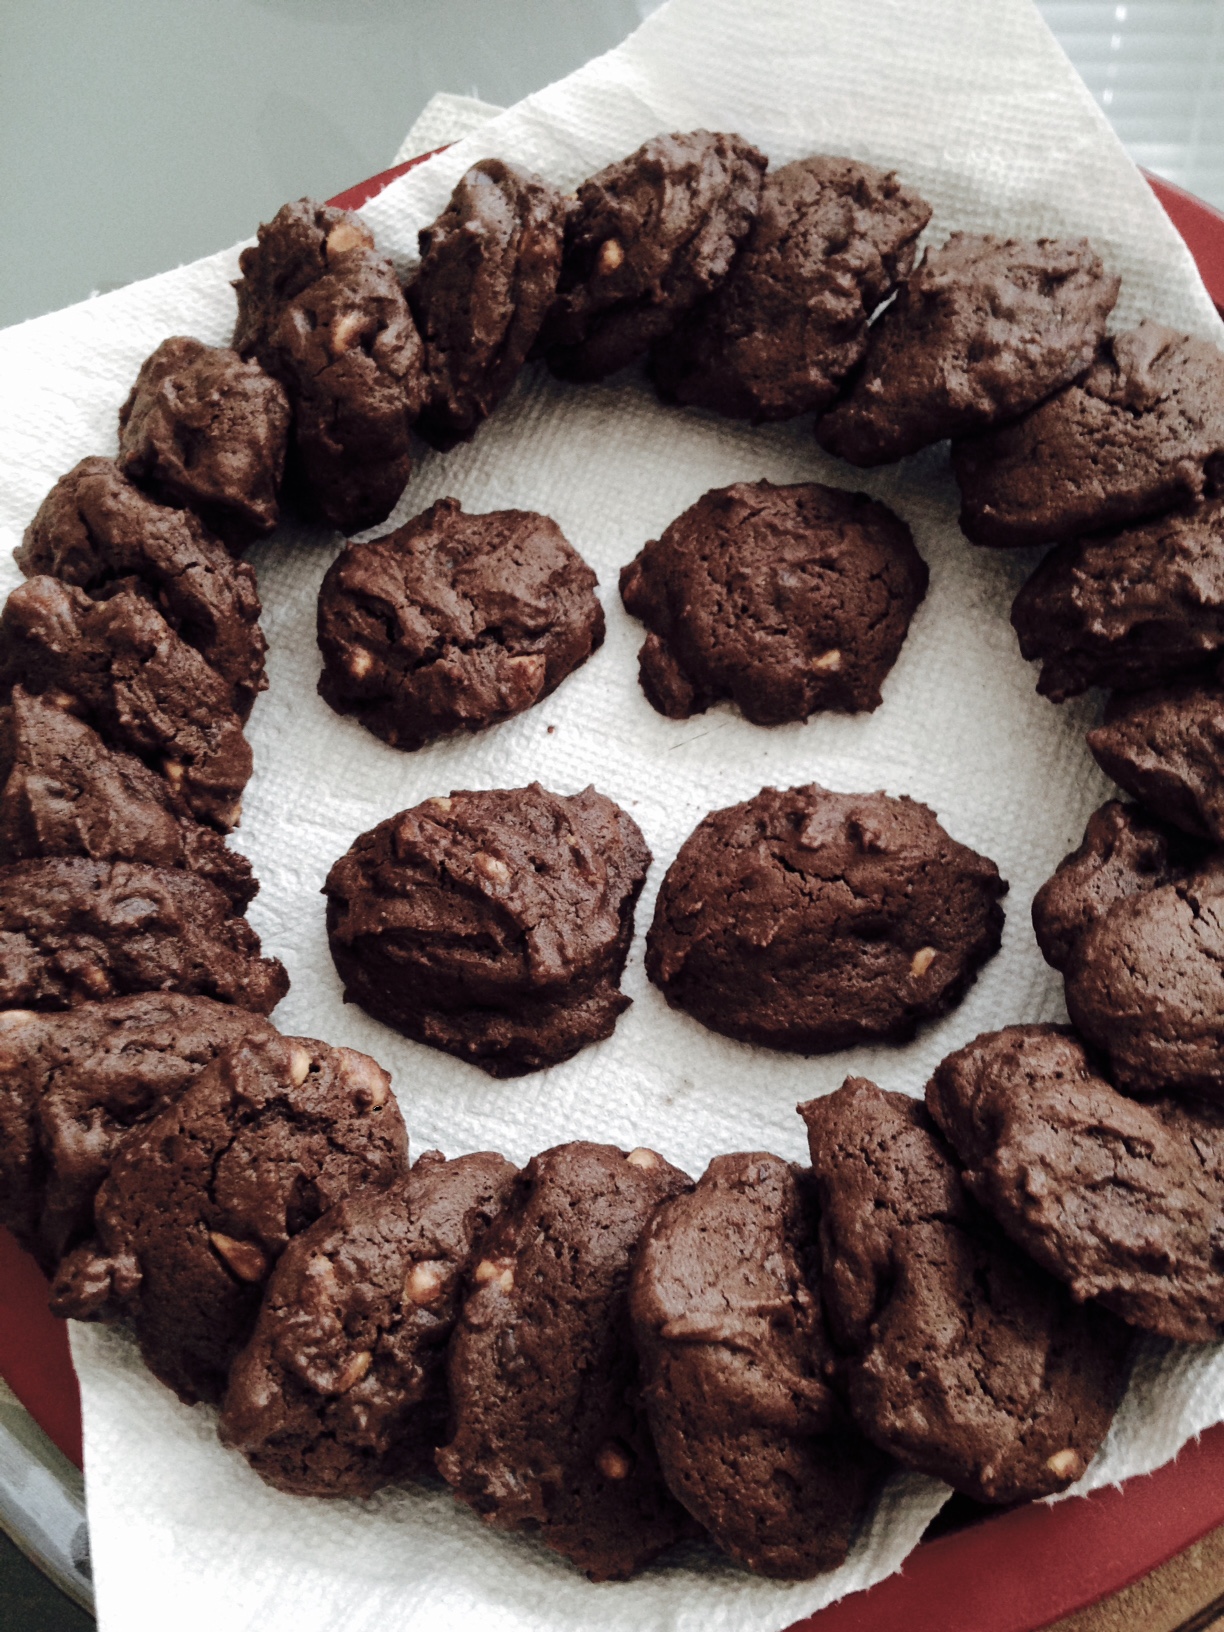 ℬ How To Make SOUR CREAM CHOCOLATE COOKIES